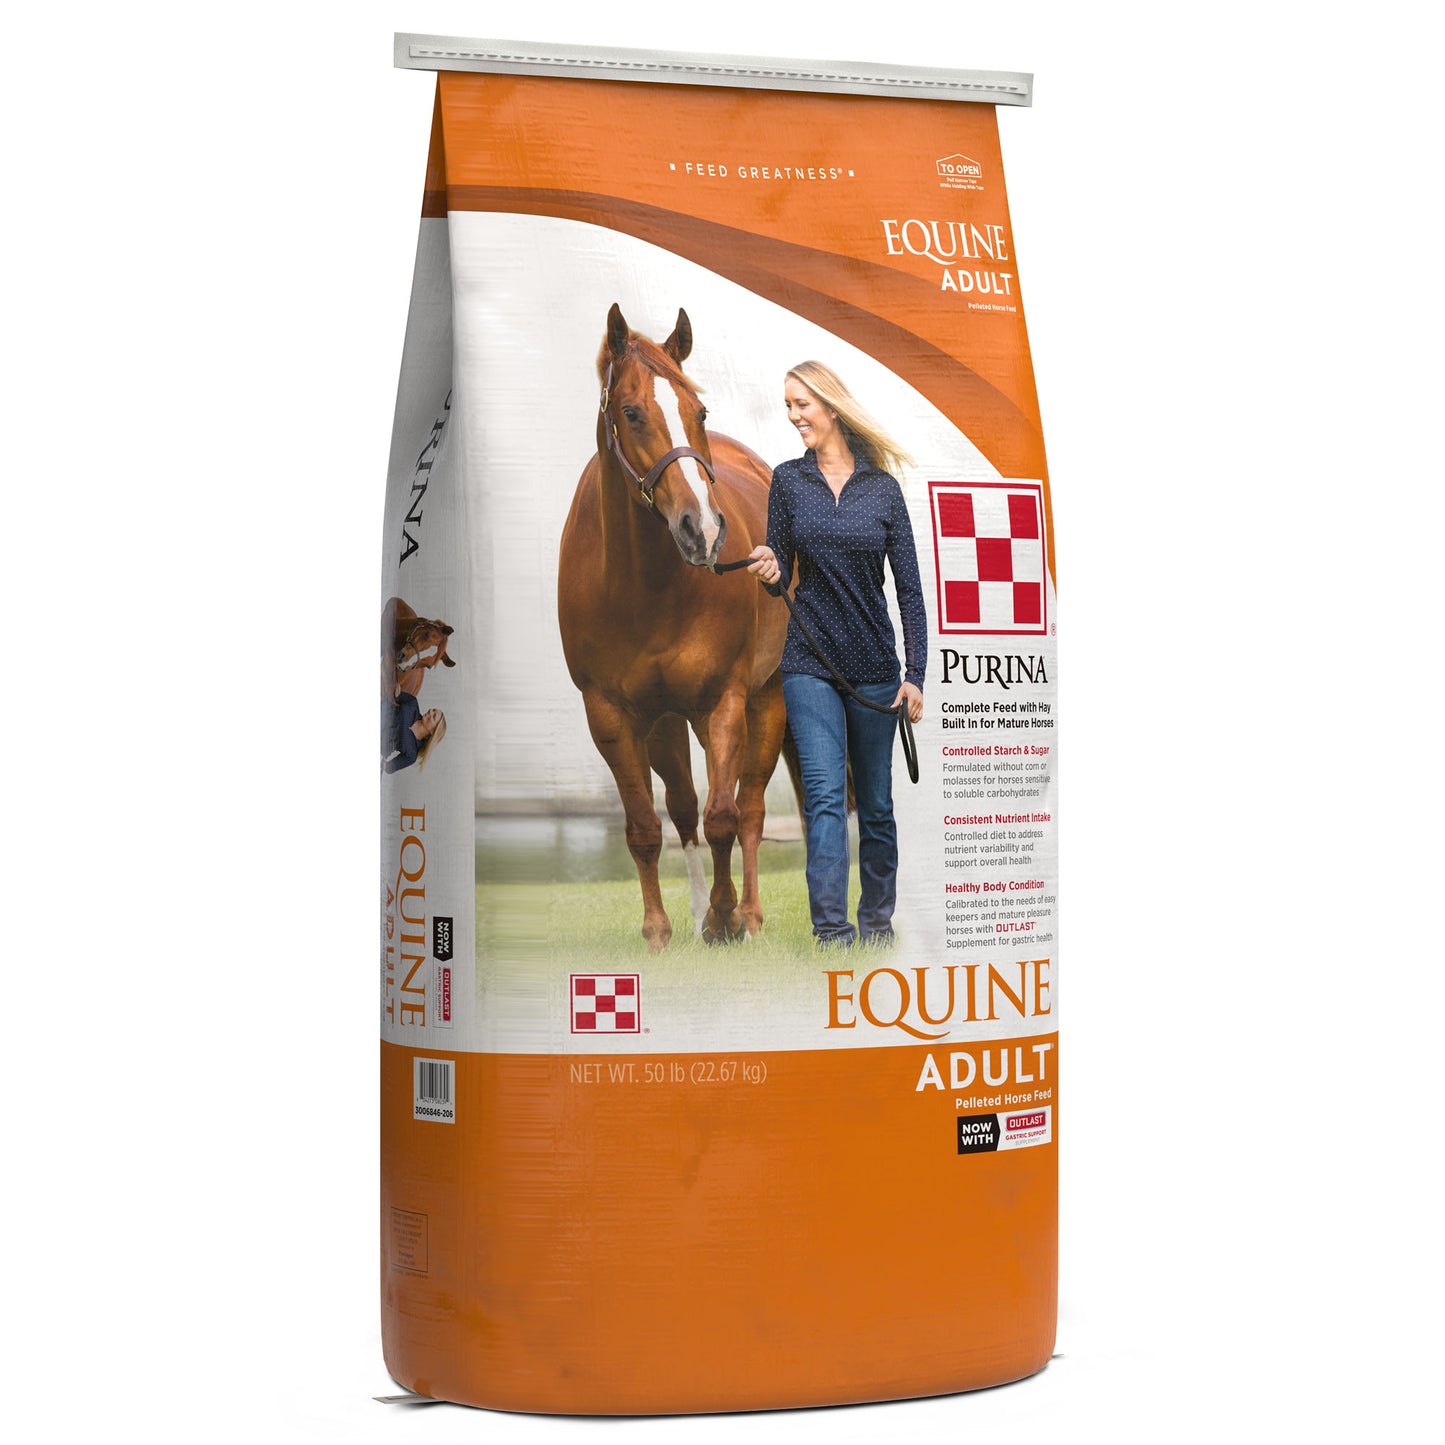 Left angle of Purina Equine Adult Feed 50 pound Bag